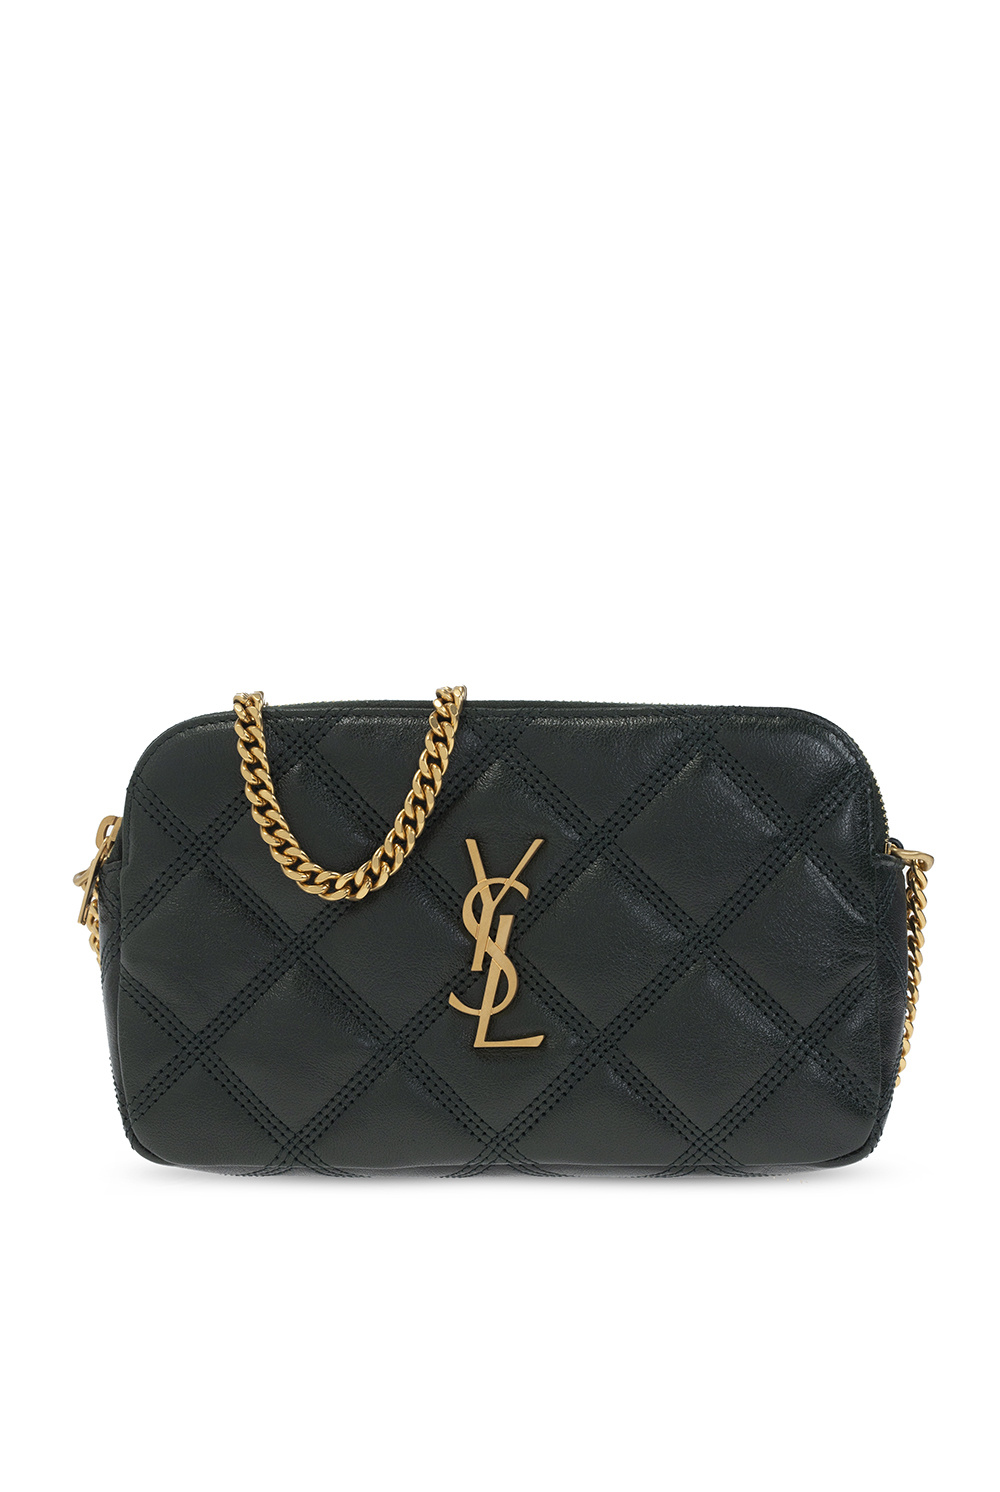 Louis Vuitton One Zip Shoulder Bags